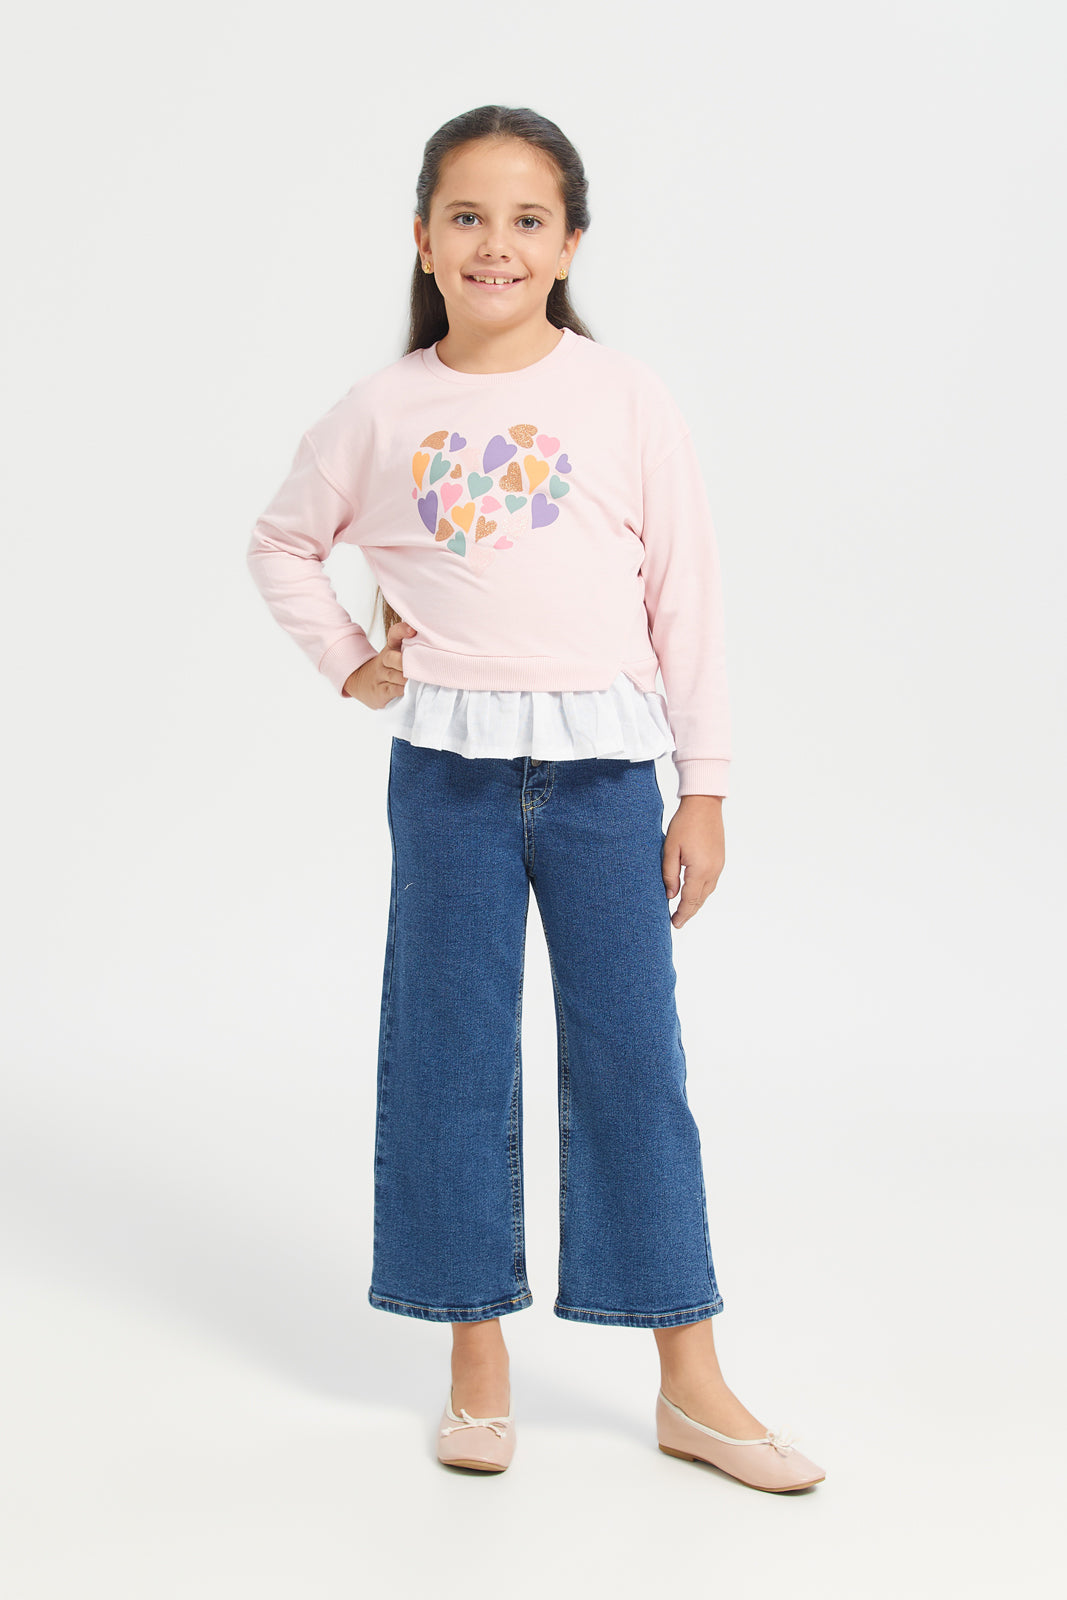 Buy Girls Pink Long Sleeve Sweatshirt With Woven Ruffles At Bottom 